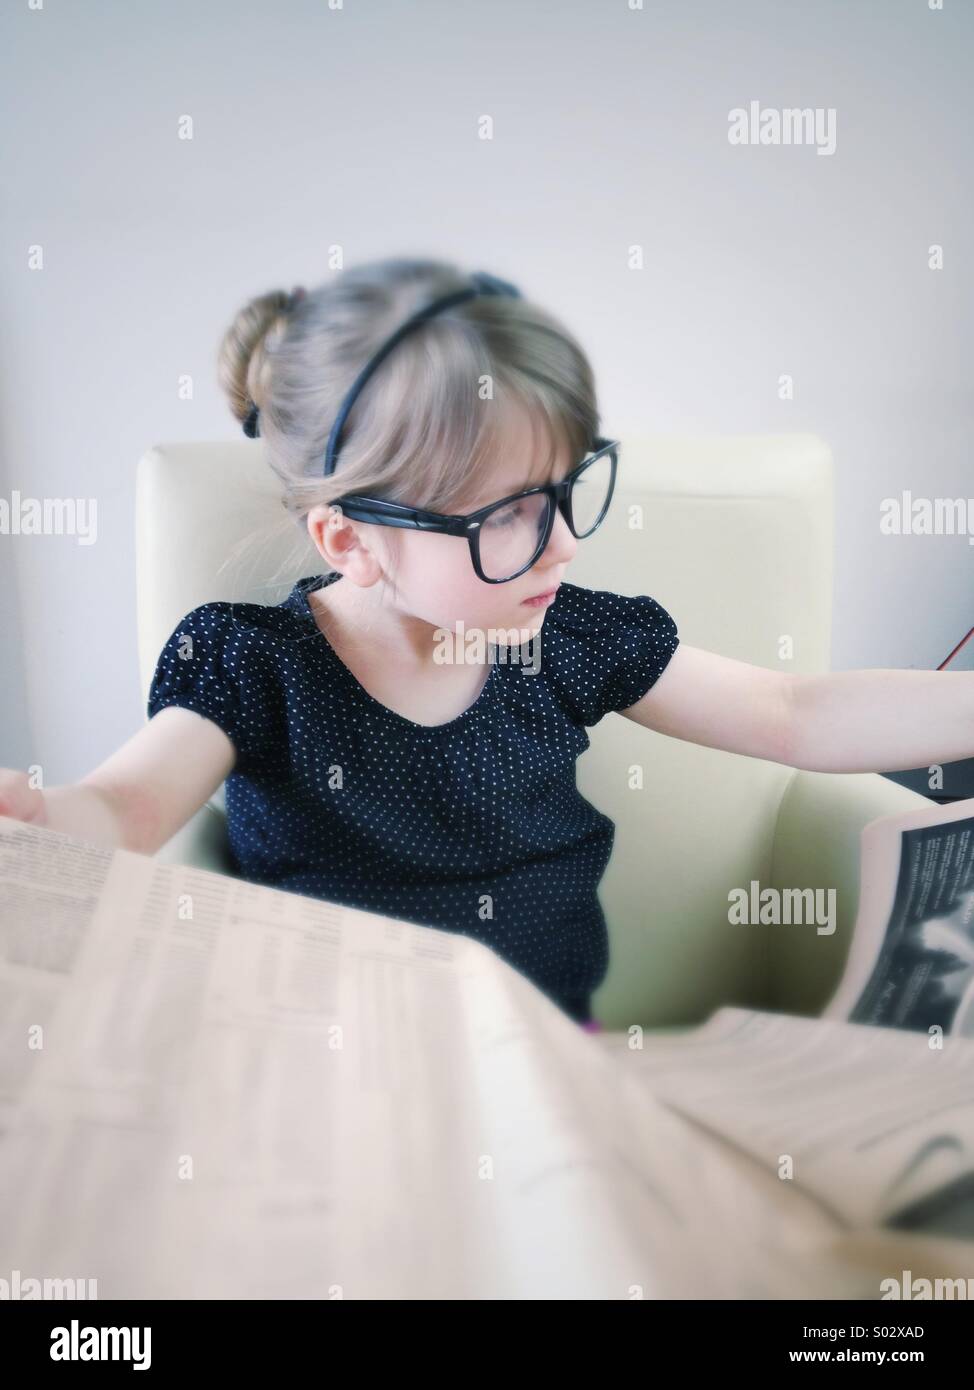 Little girl reading newspaper Banque D'Images